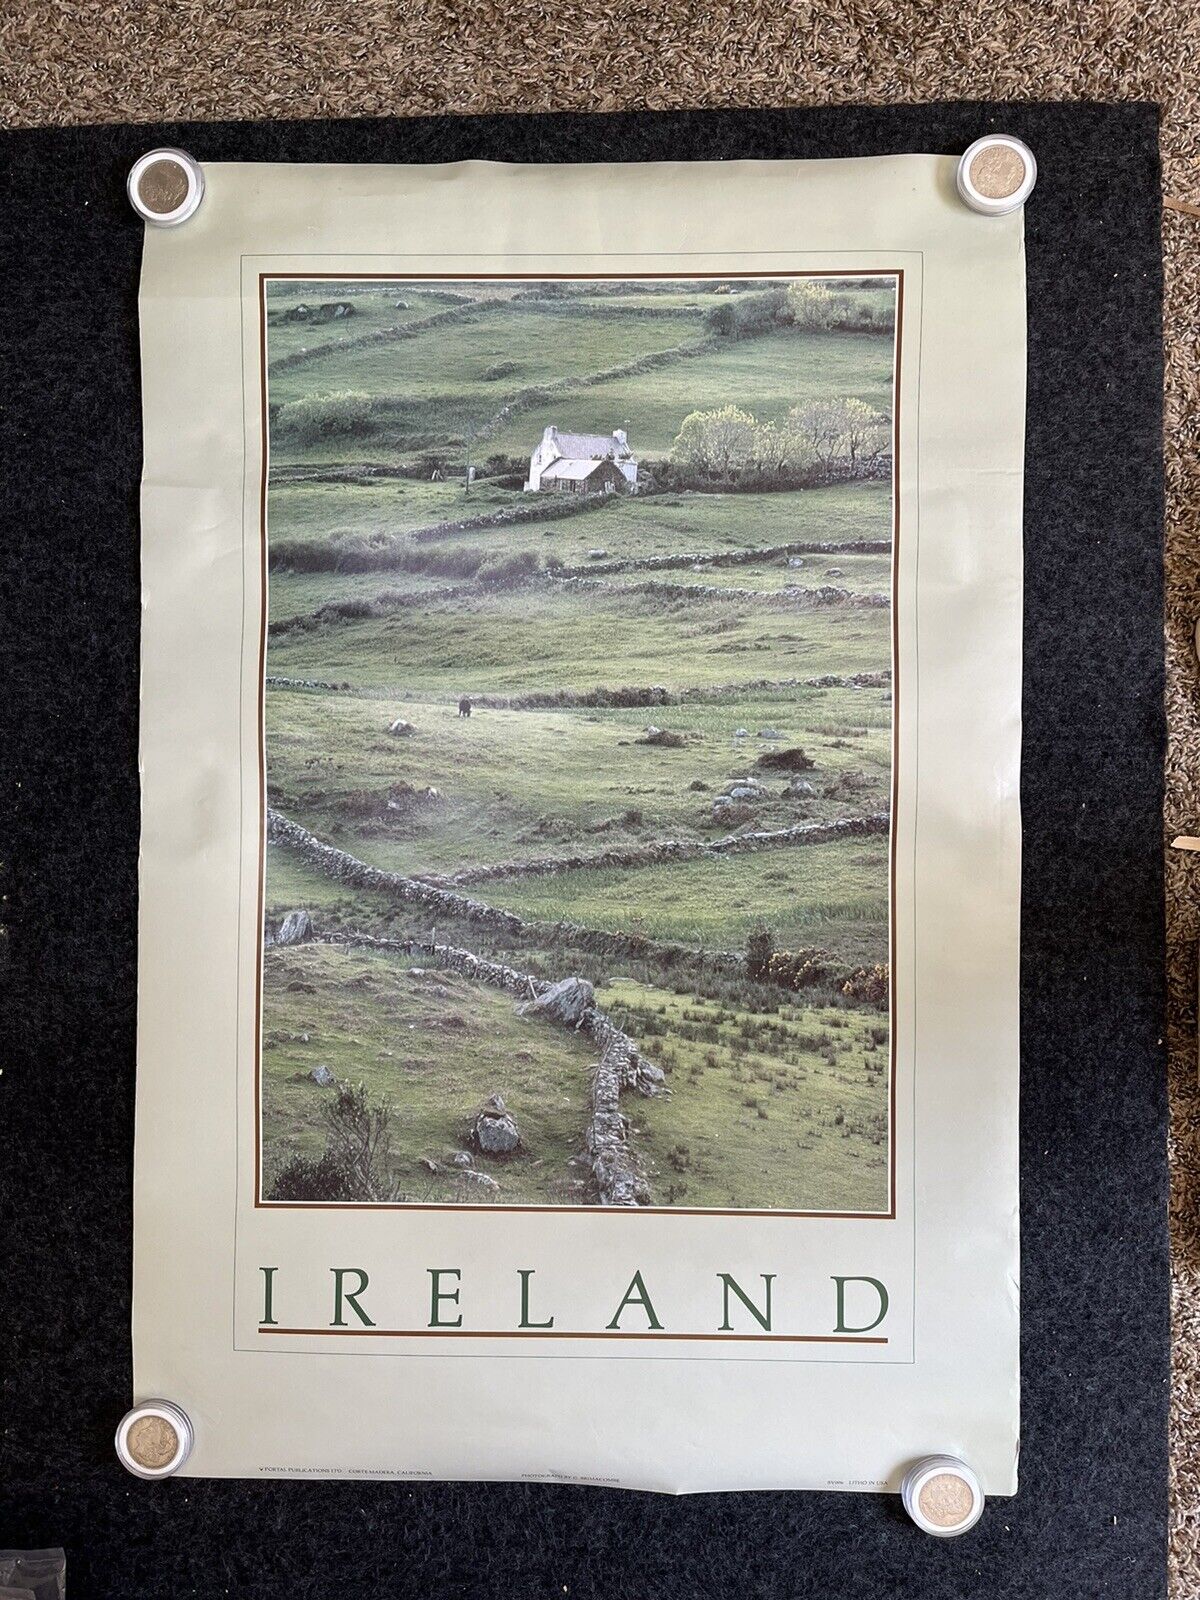 1970s Vintage Ireland Travel Poster - Irish Airline Travel Art 35 x 20